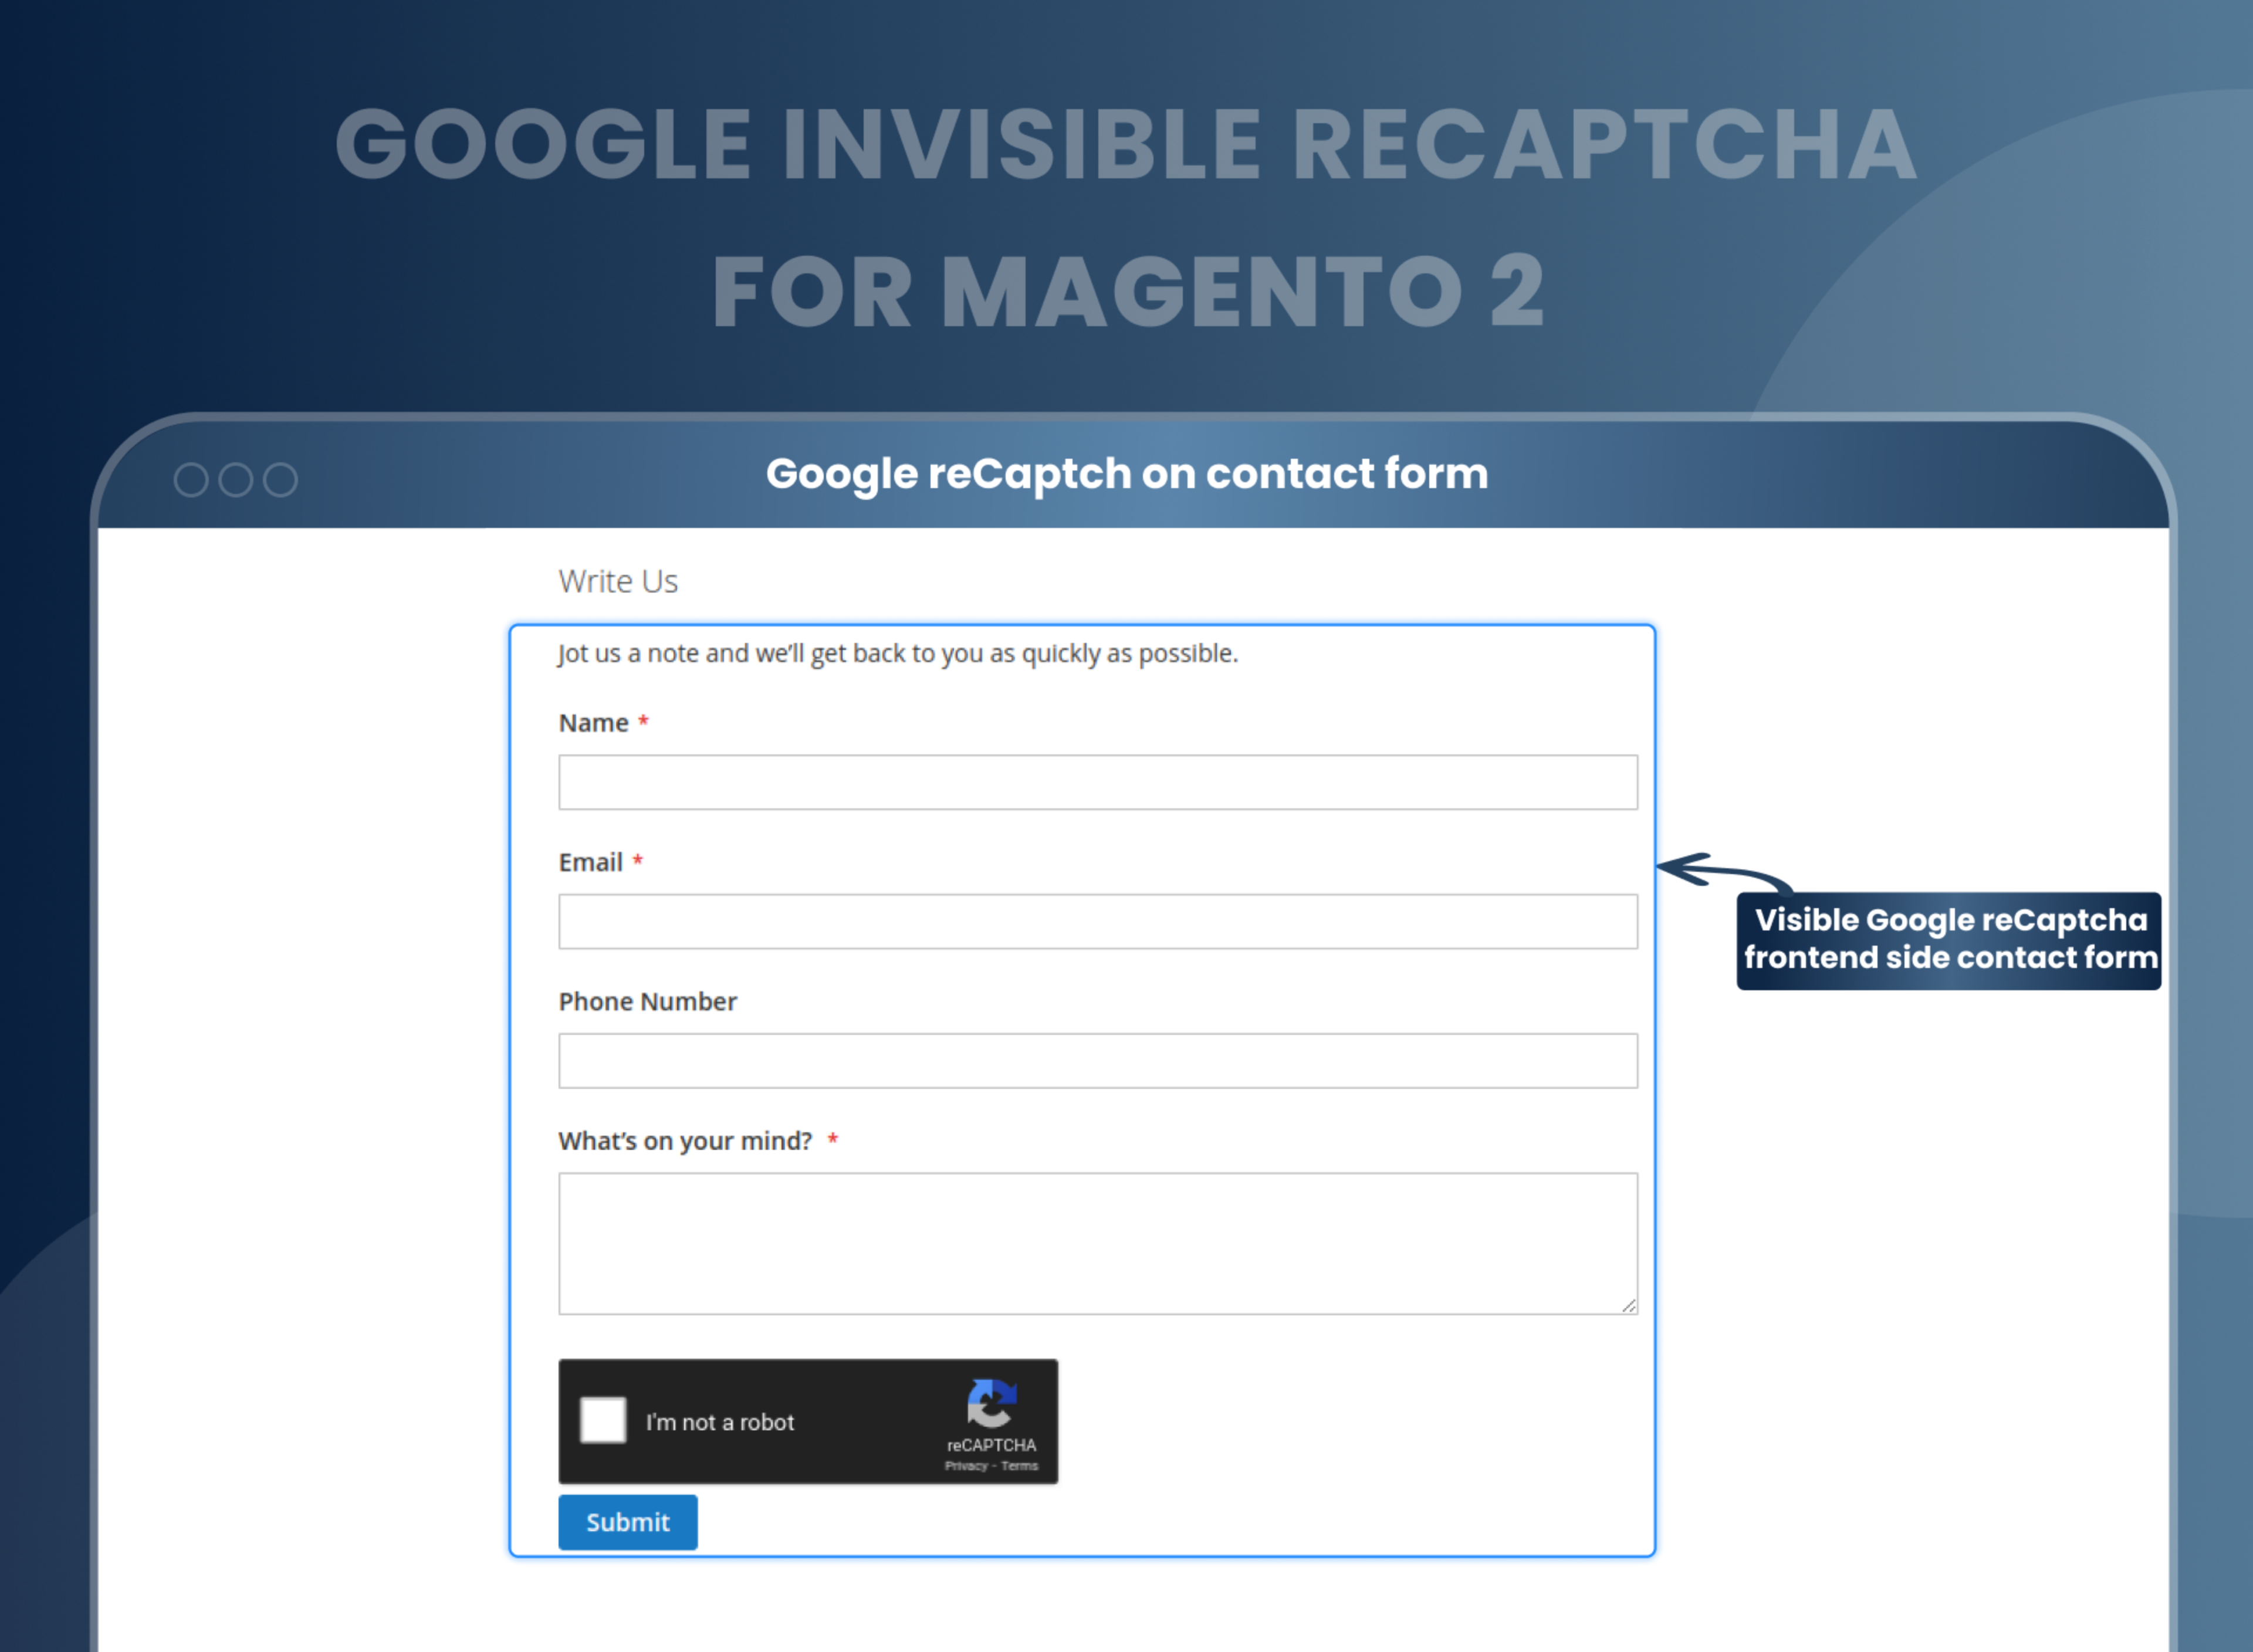 Google reCaptch on contact form